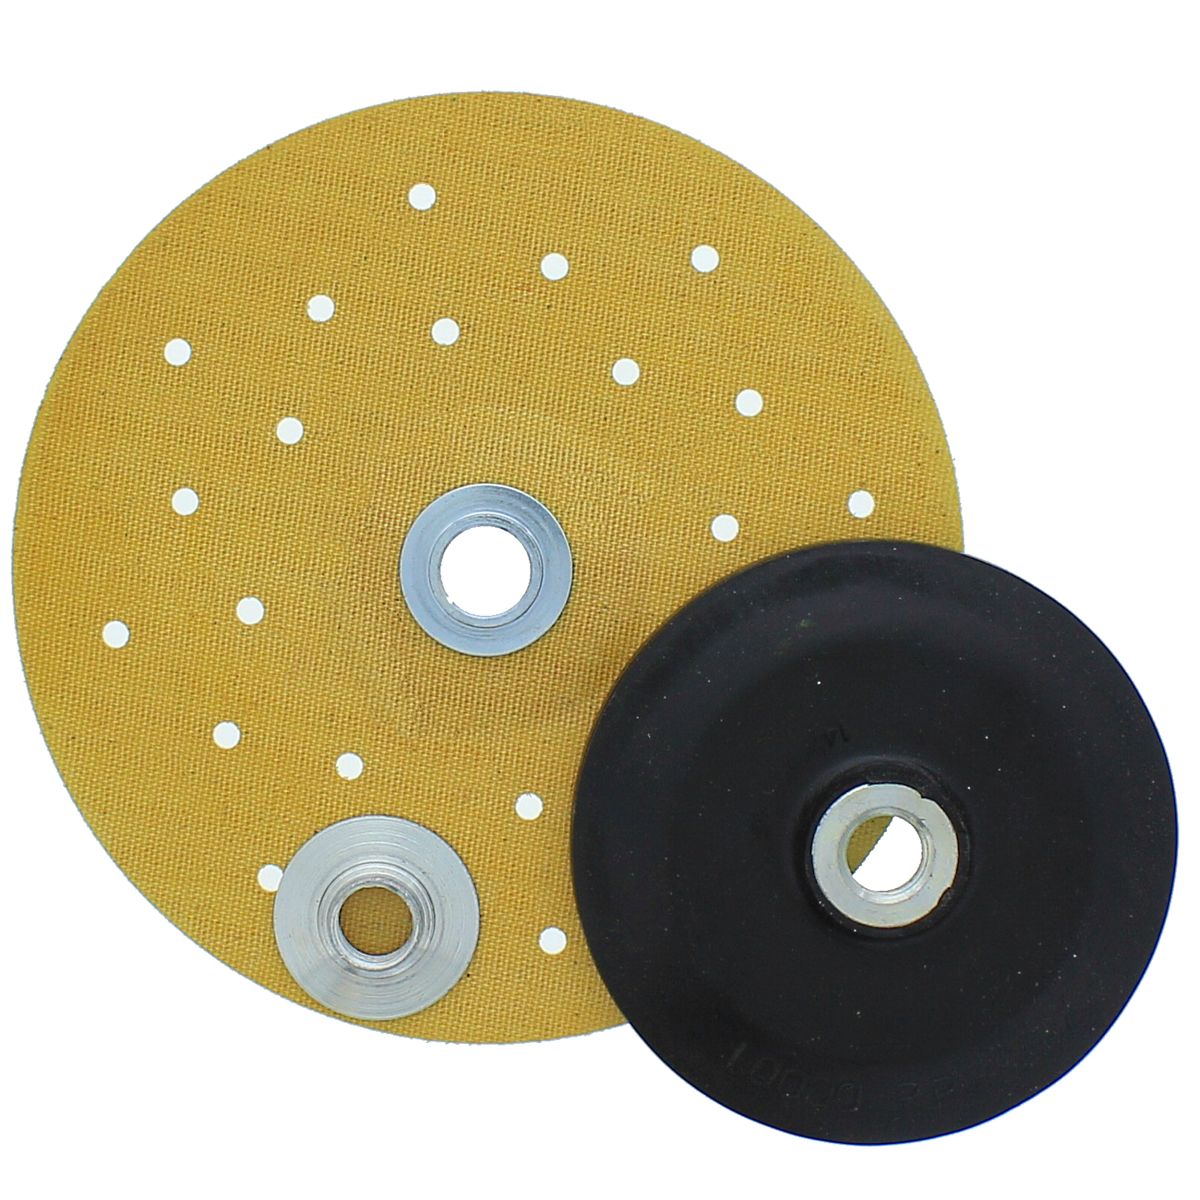 7" Standard Phenolic Disc Assembly